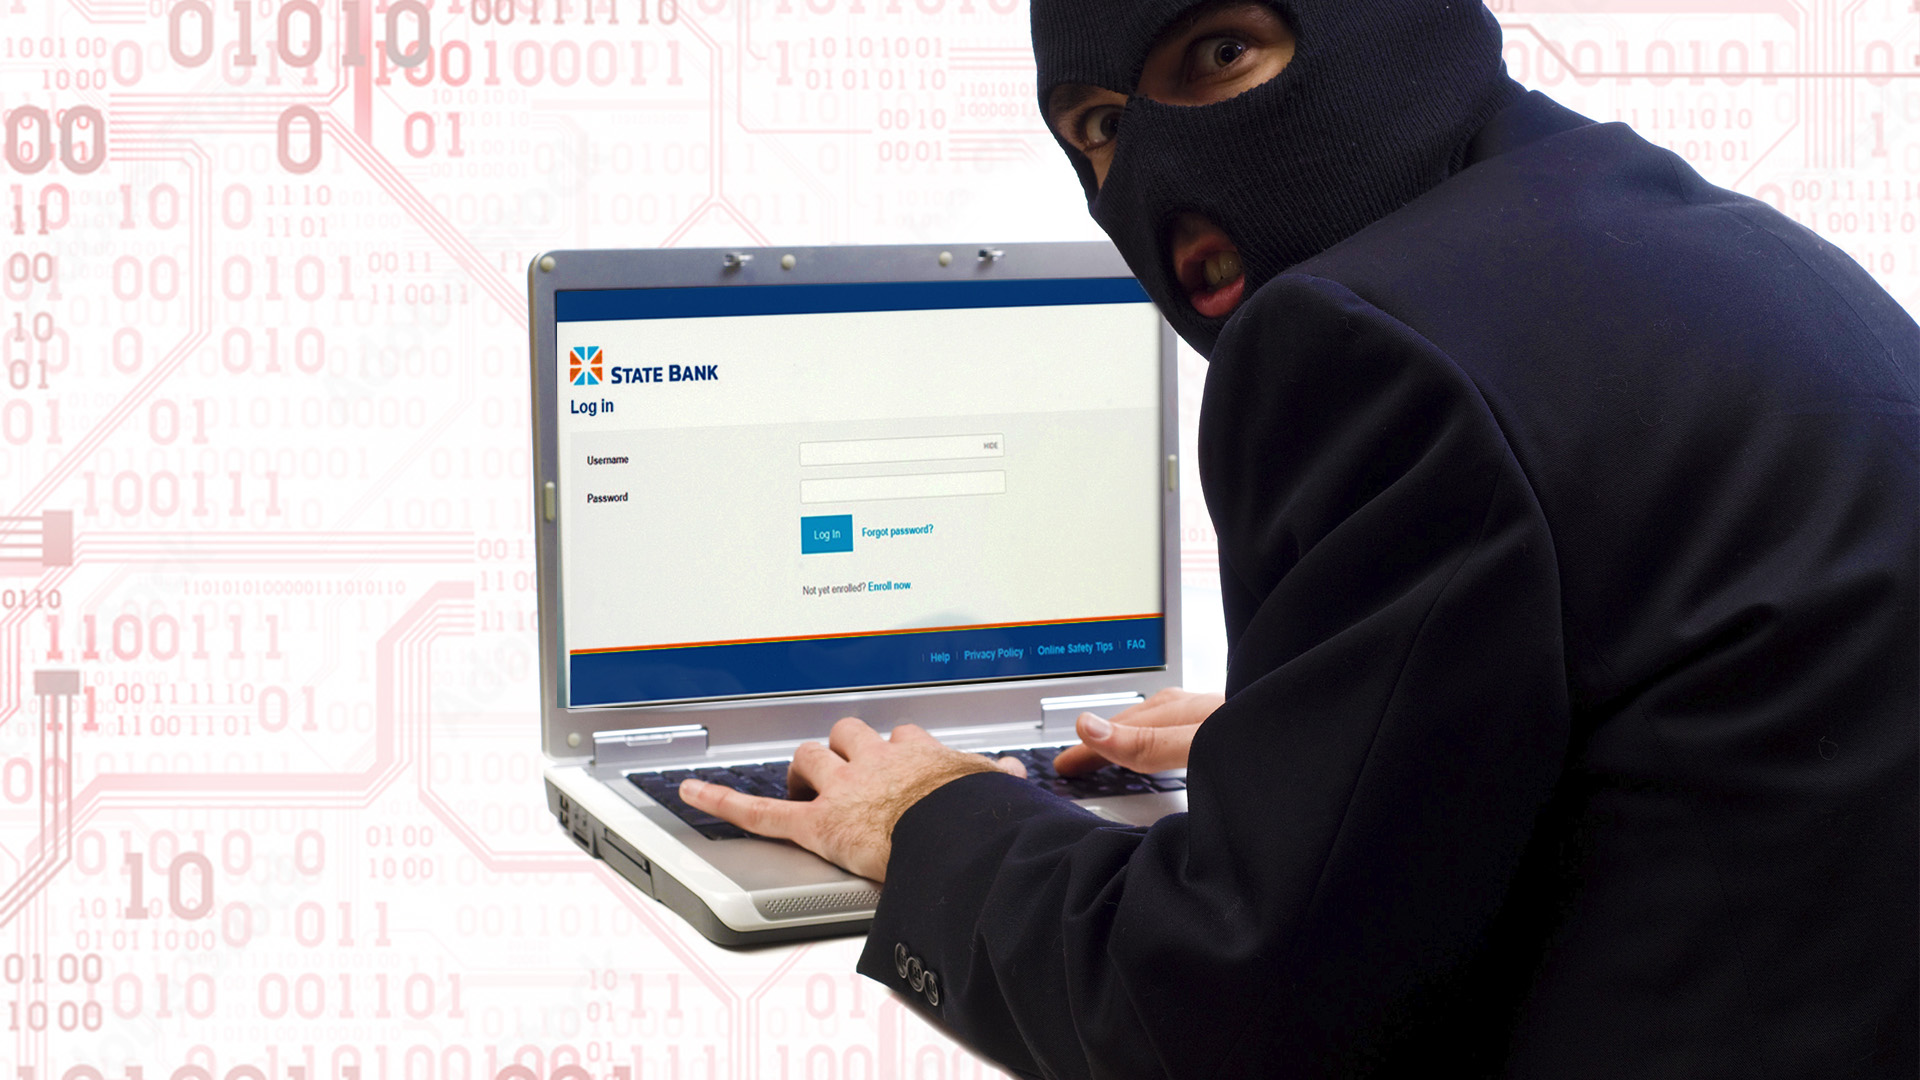 Cibercriminales utilizan perfiles falsos